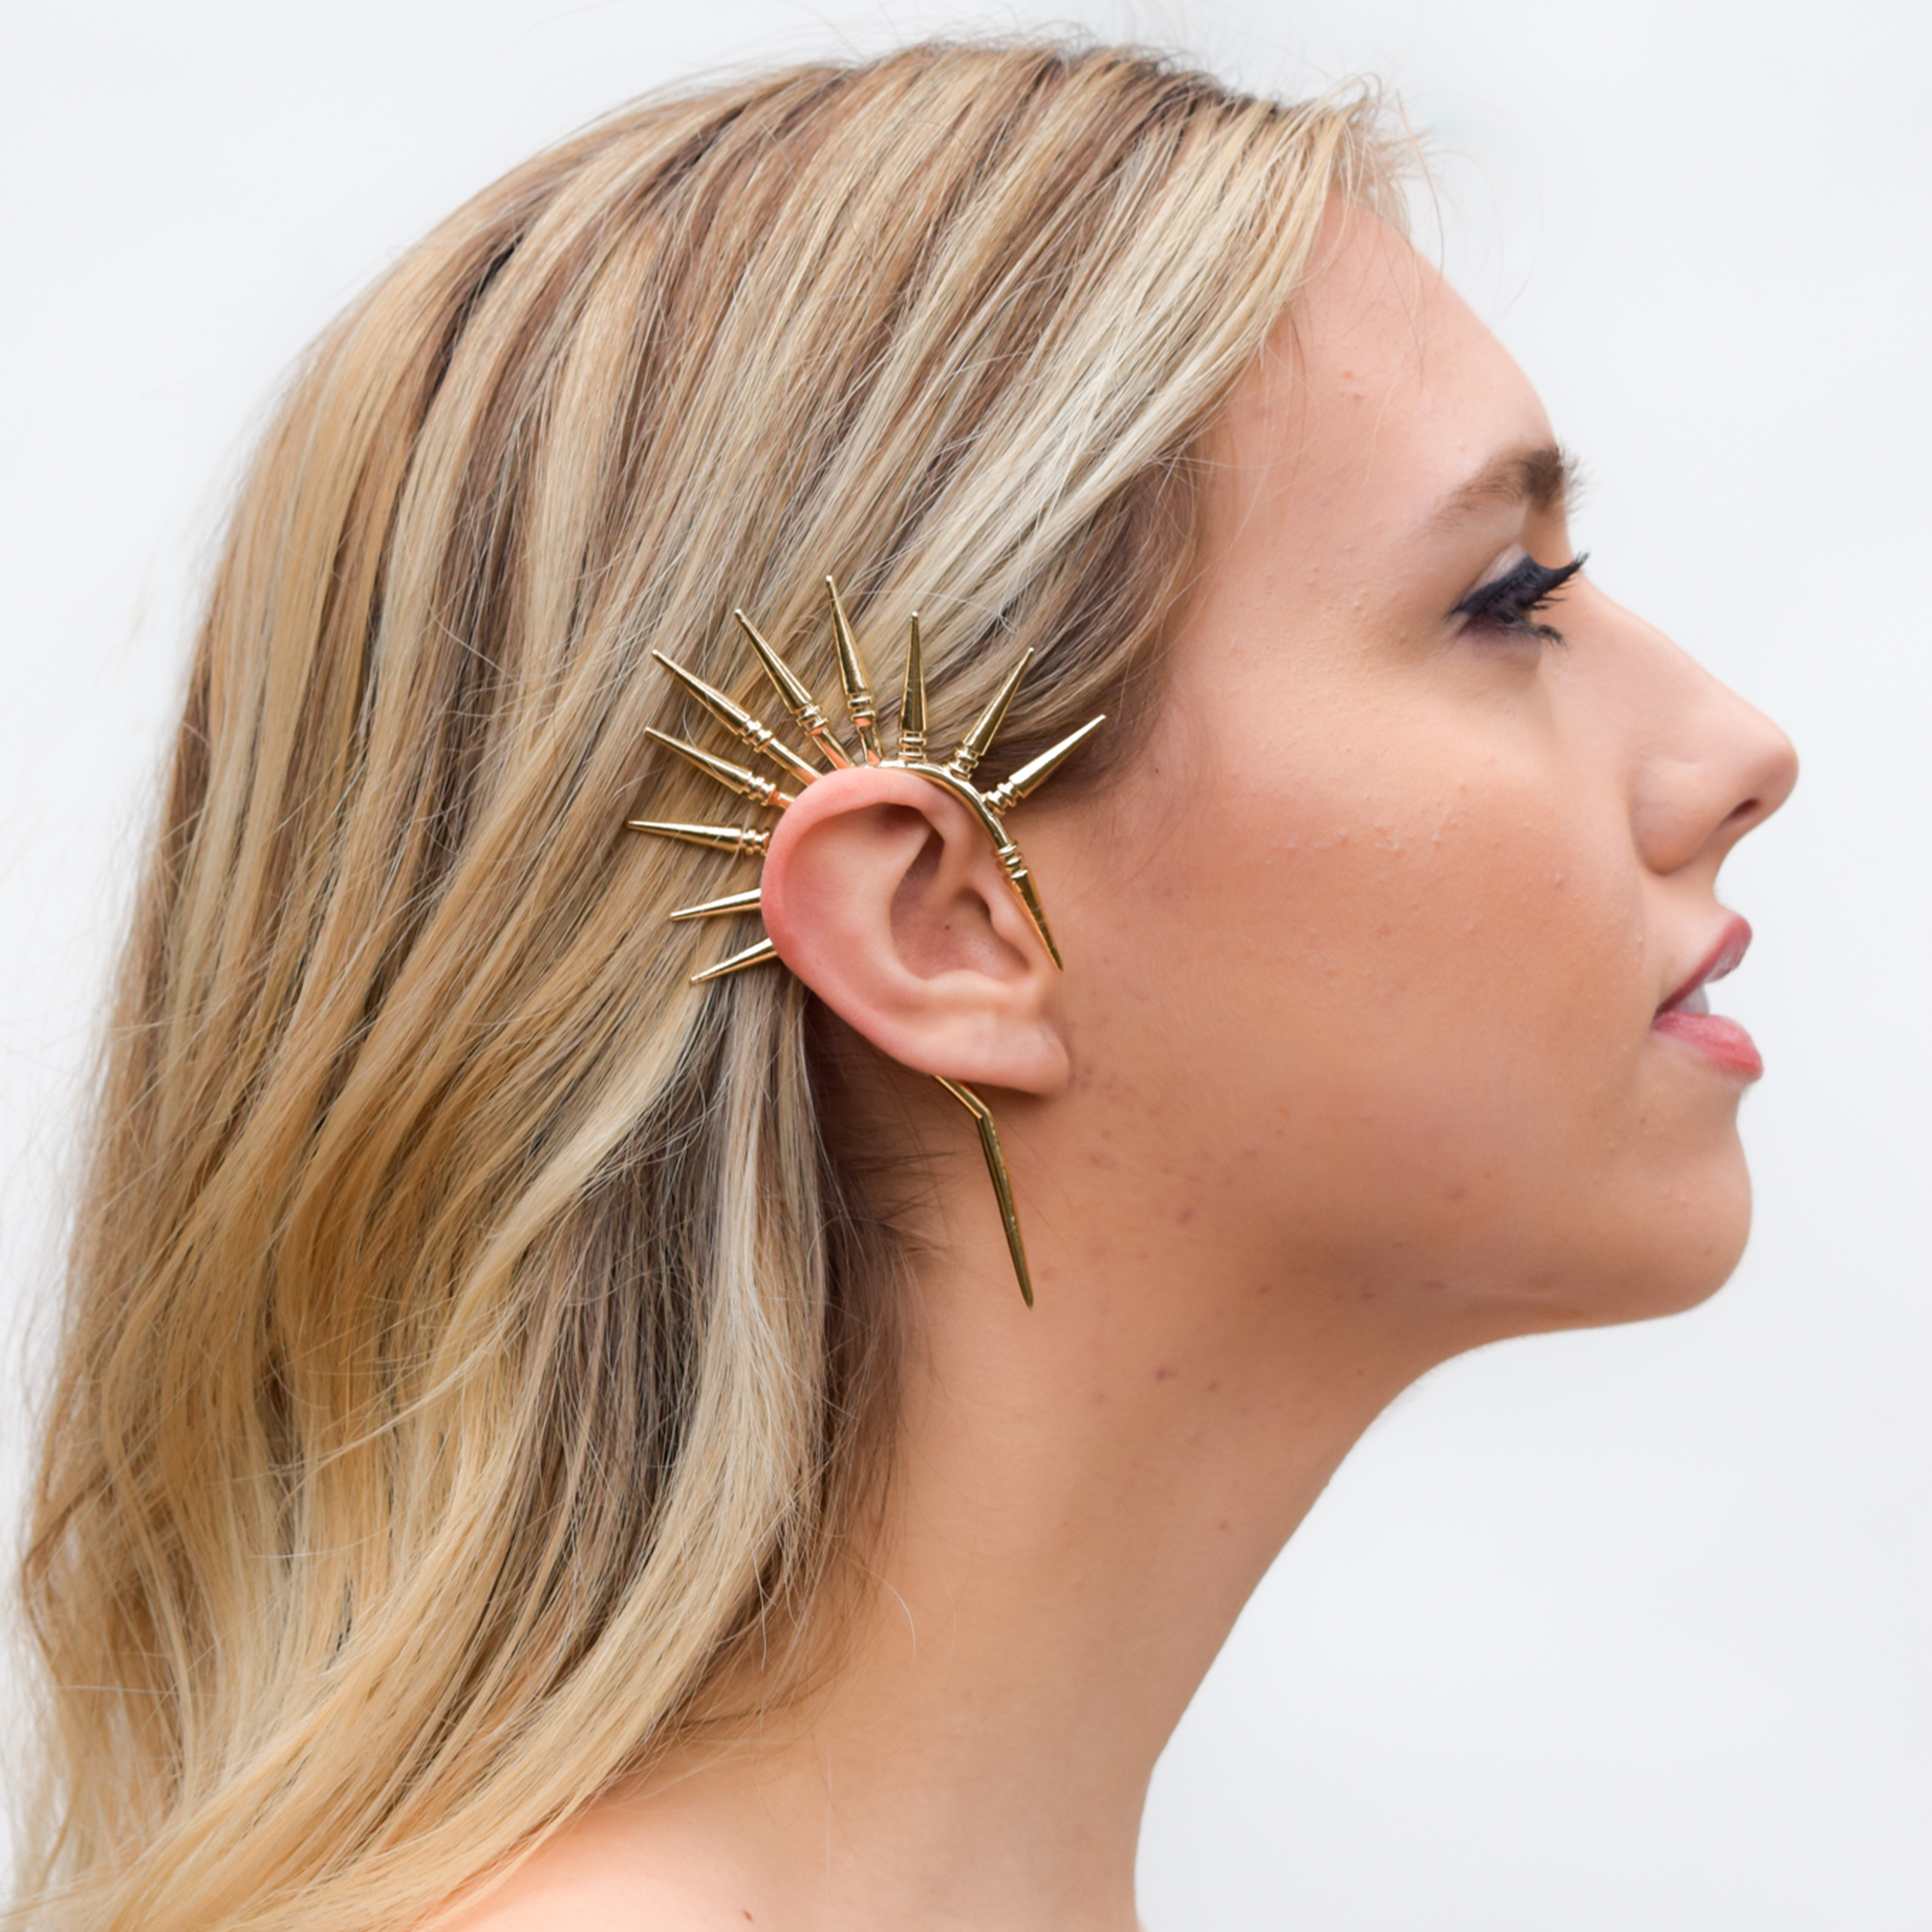 Beautifull Ear Cuff Earrings With Chain - Latest Earcuffs Designs